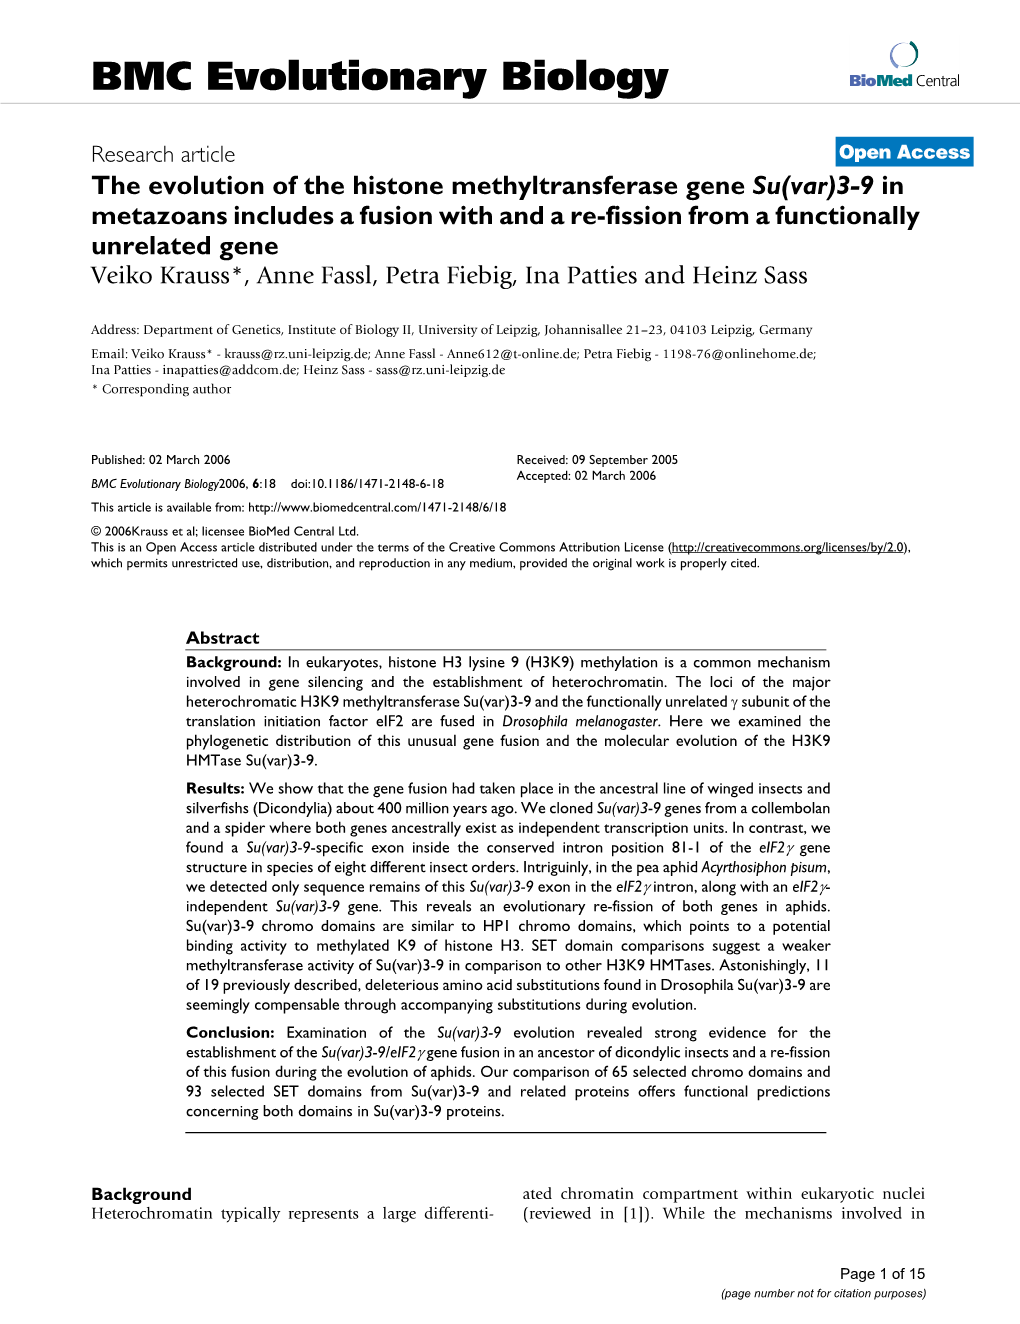 The Evolution of the Histone Methyltransferase Gene Su (Var) 3-9